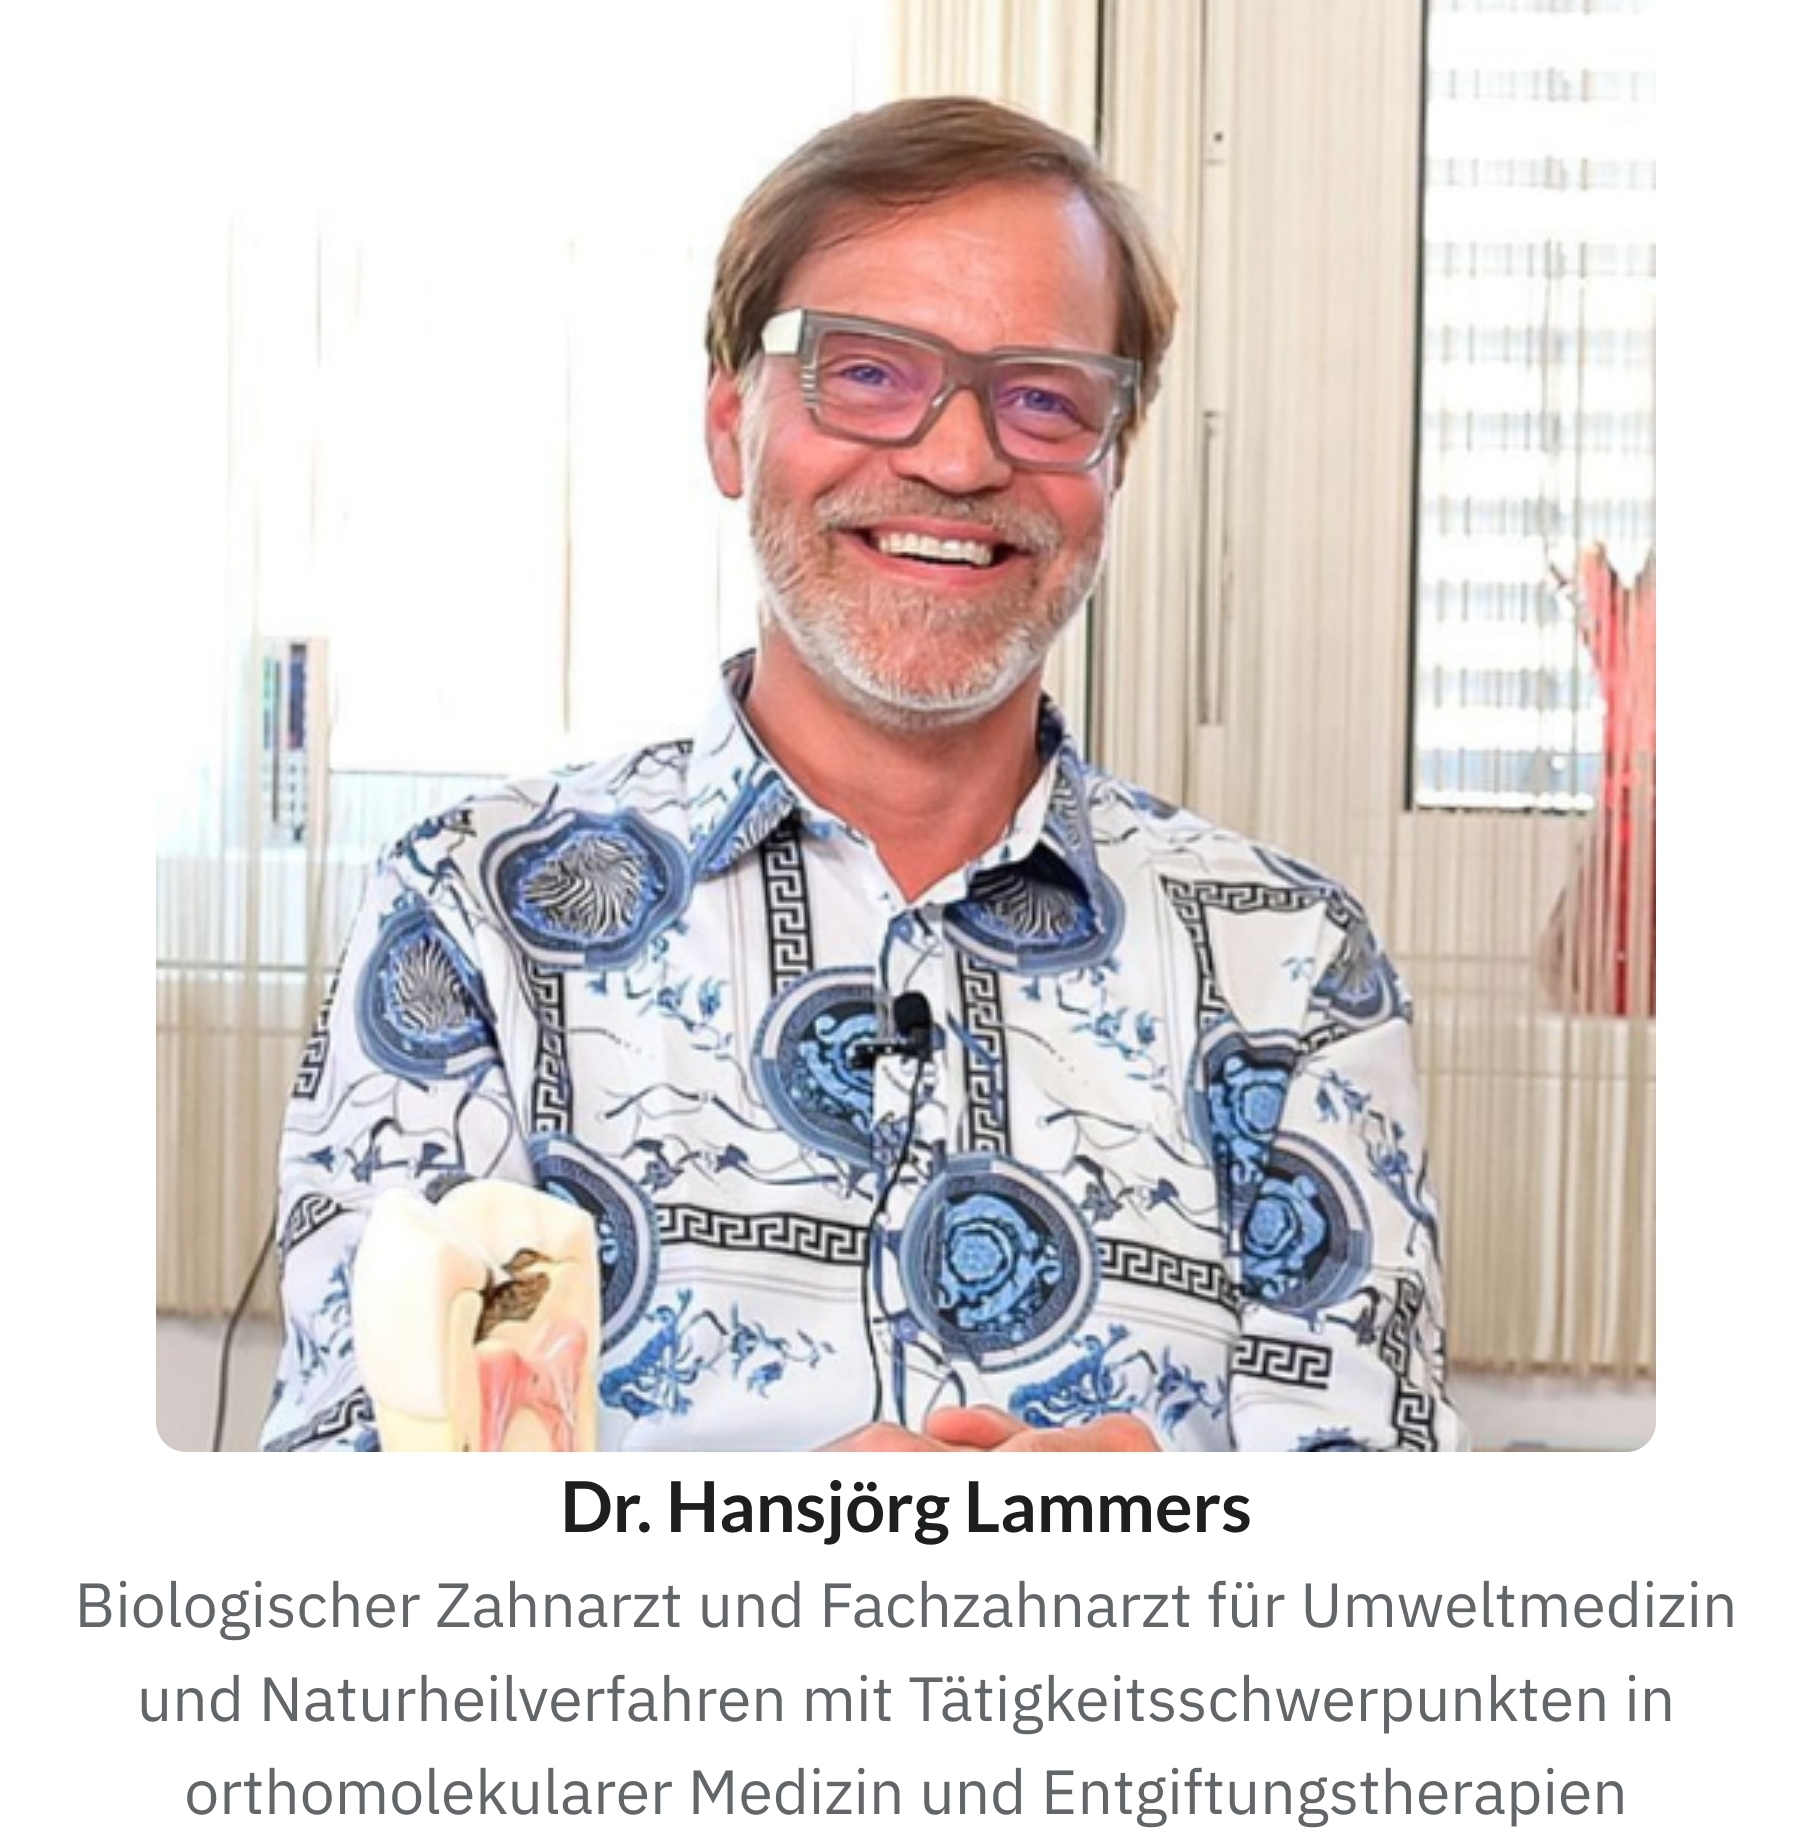 FirstBioDent-Clinic - Hansjoerg, Lammers